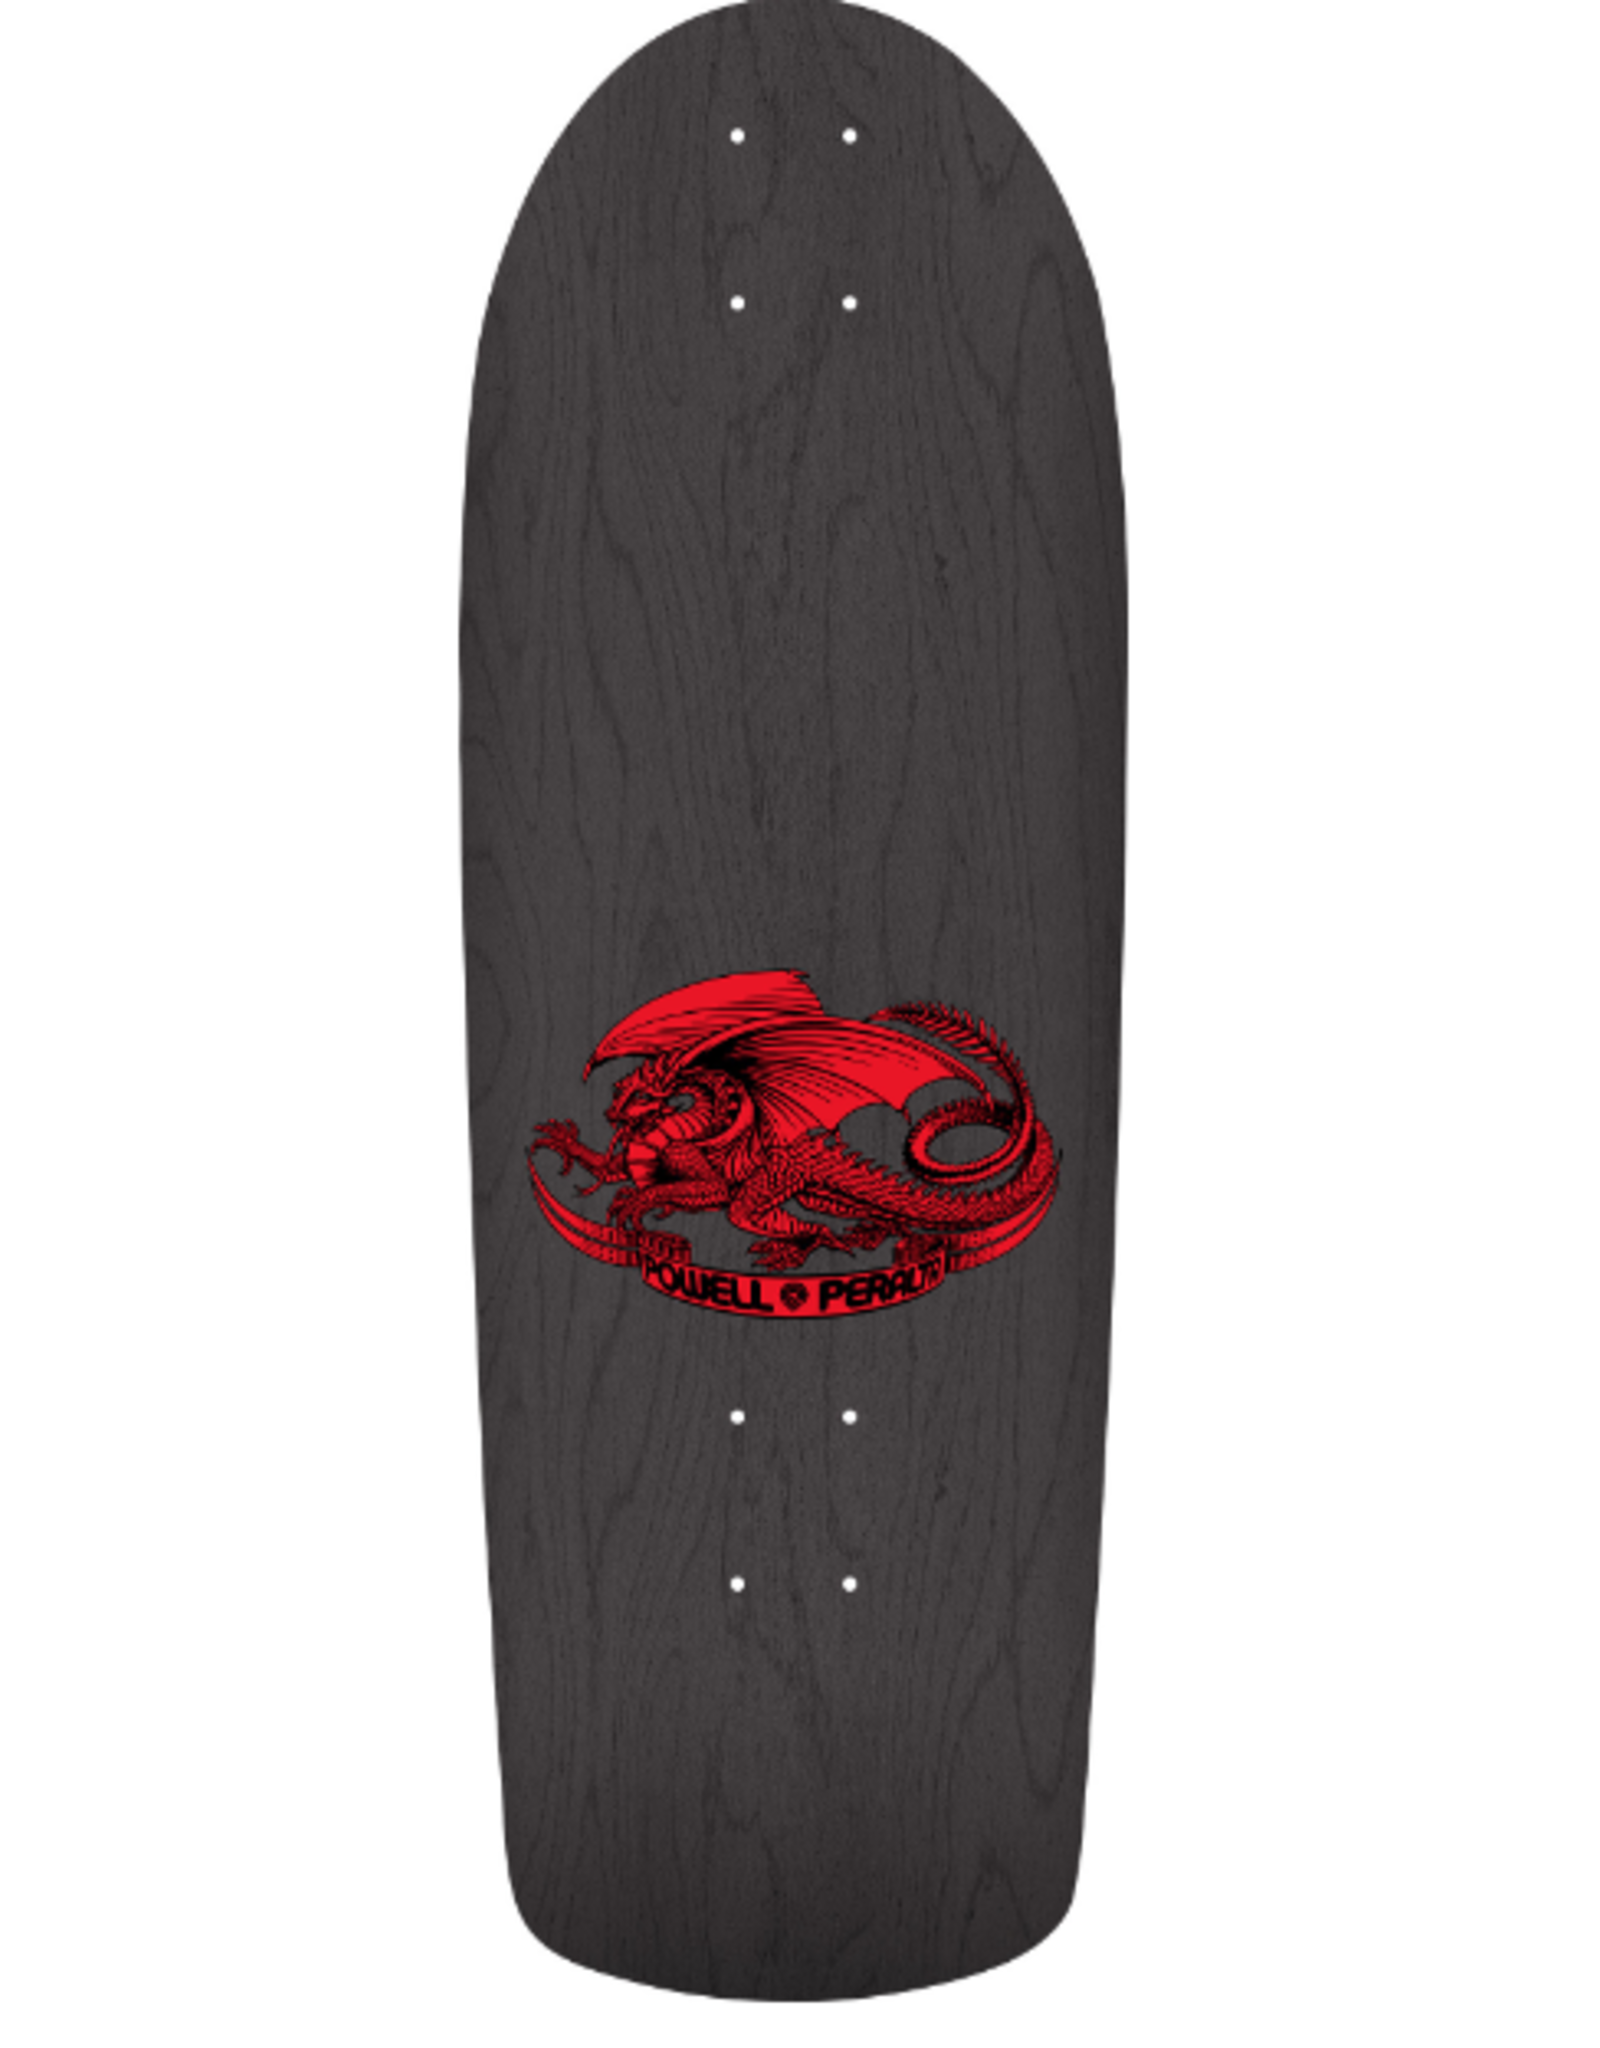 POWELL PERALTA Powell Peralta Mike McGill Skull & Snake Reissue Skateboard Deck Gray Stain - 10 x 30.125